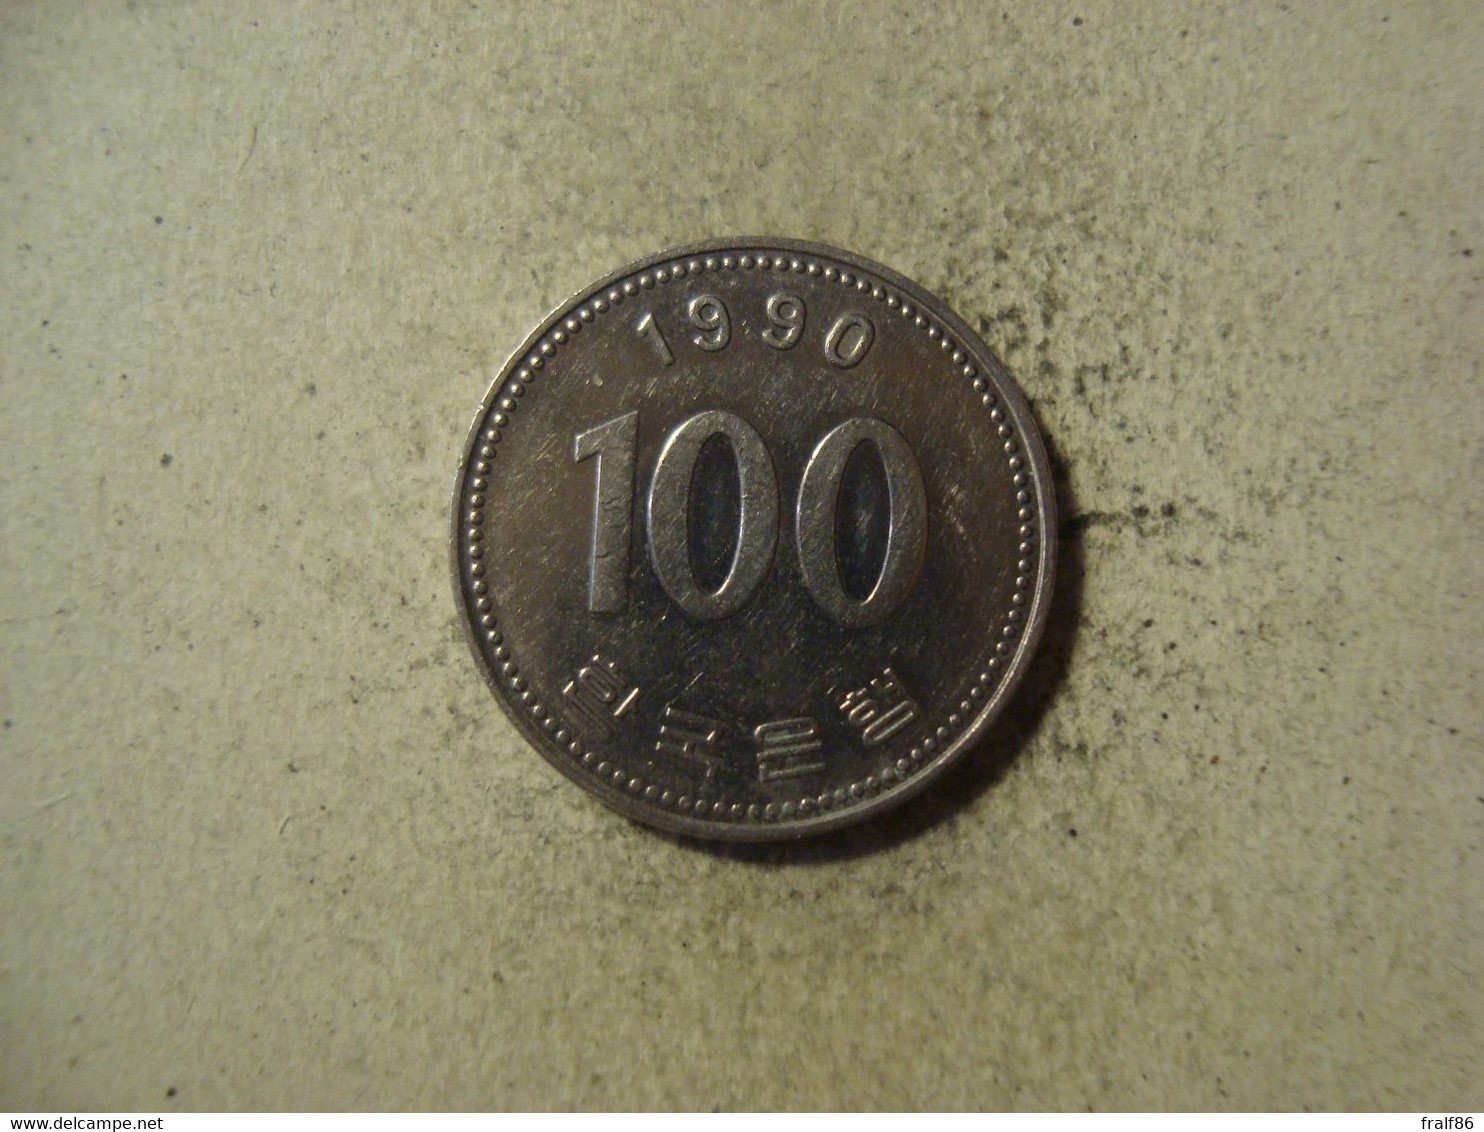 MONNAIE COREE DU SUD 100 WON 1990 - Korea, South